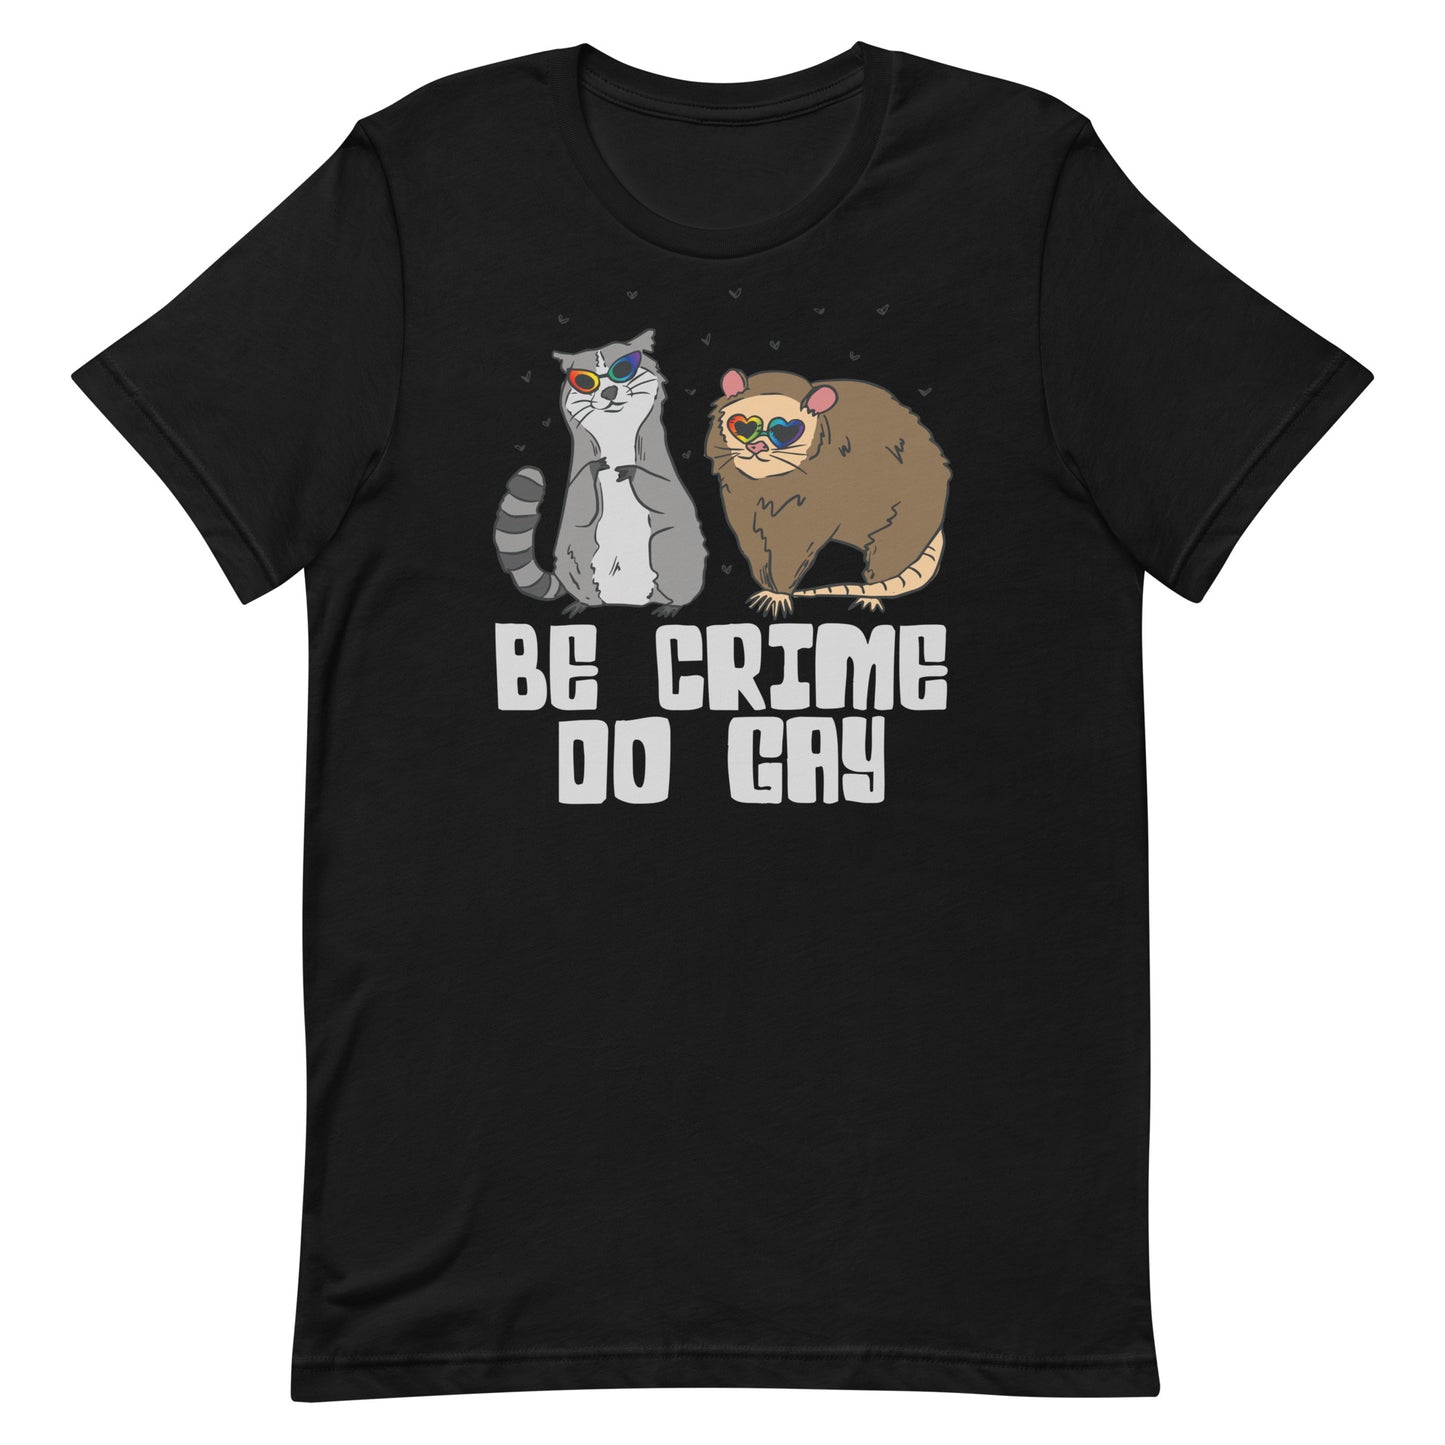 Be Crime Do Gay (Raccoon and Possum) Unisex t-shirt